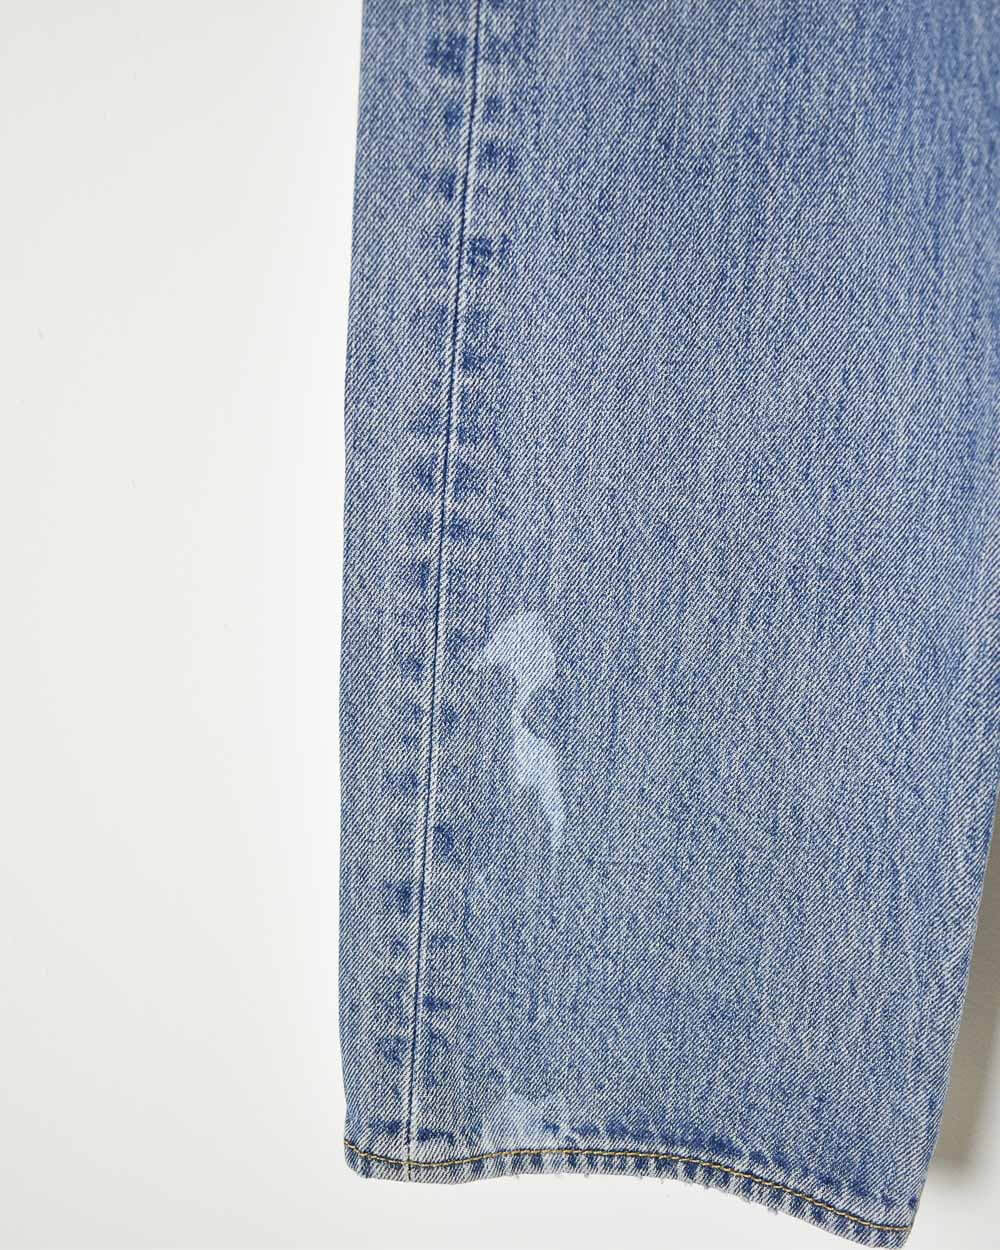 Blue Levi Strauss & Co. Jeans - W32 L32